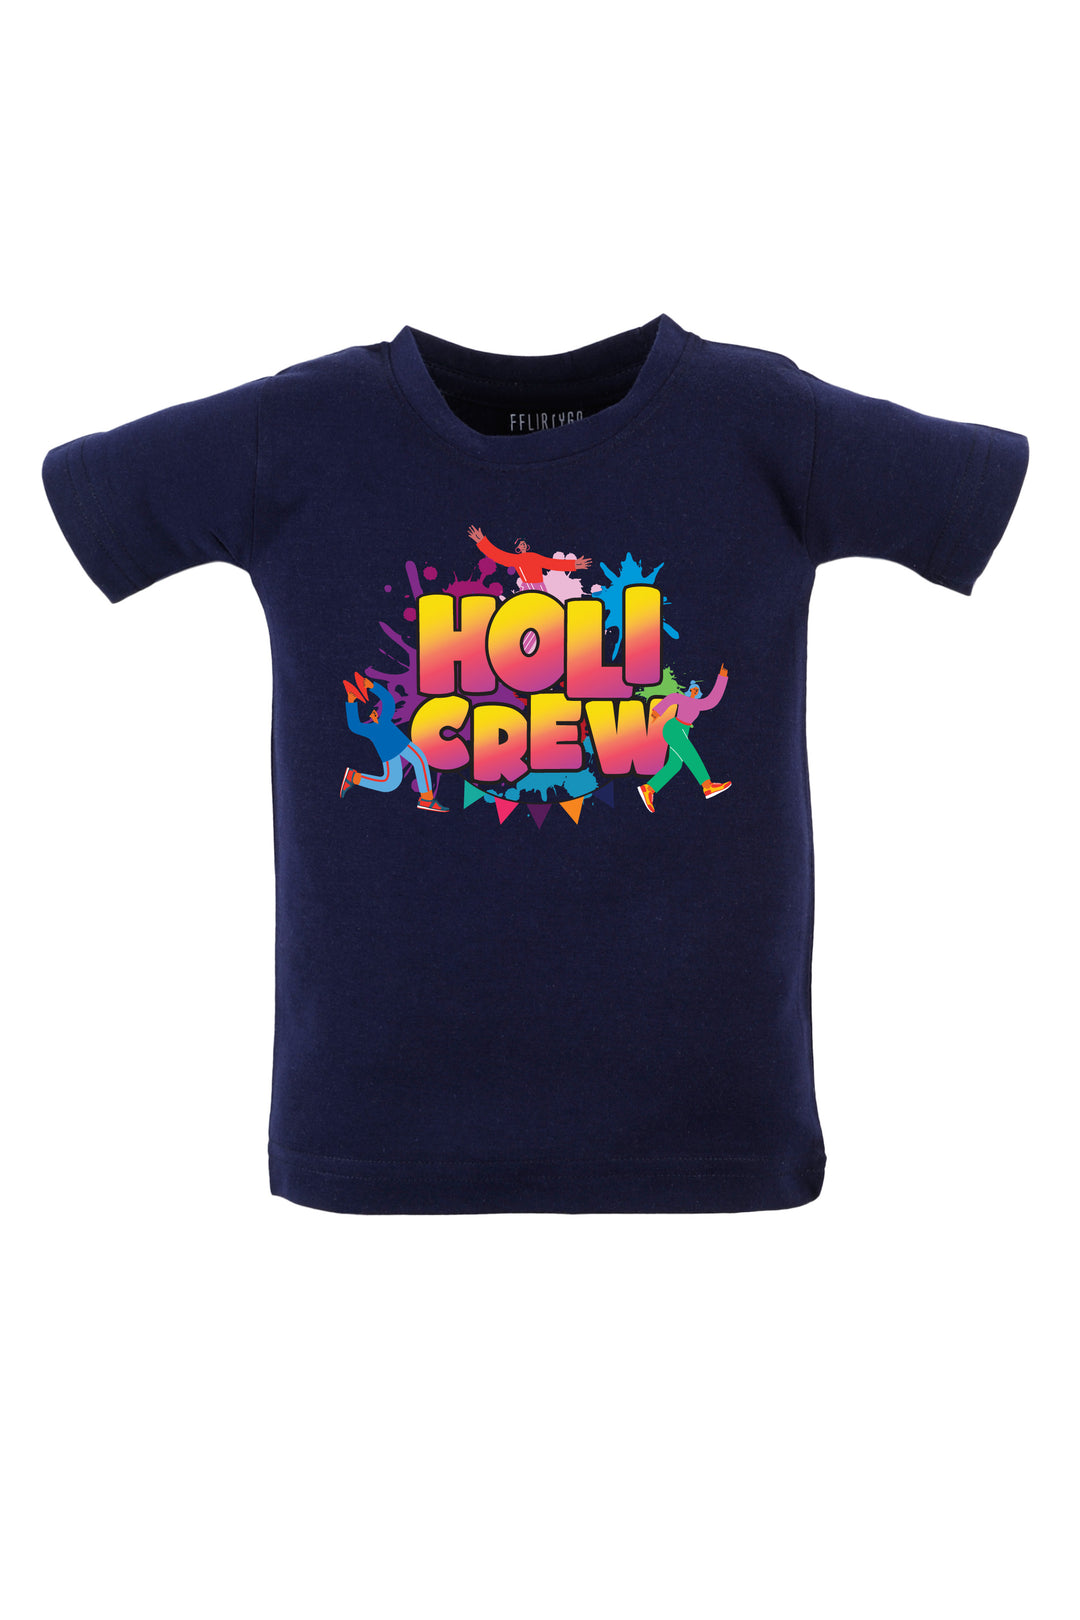 Holi Crew Kids T Shirt